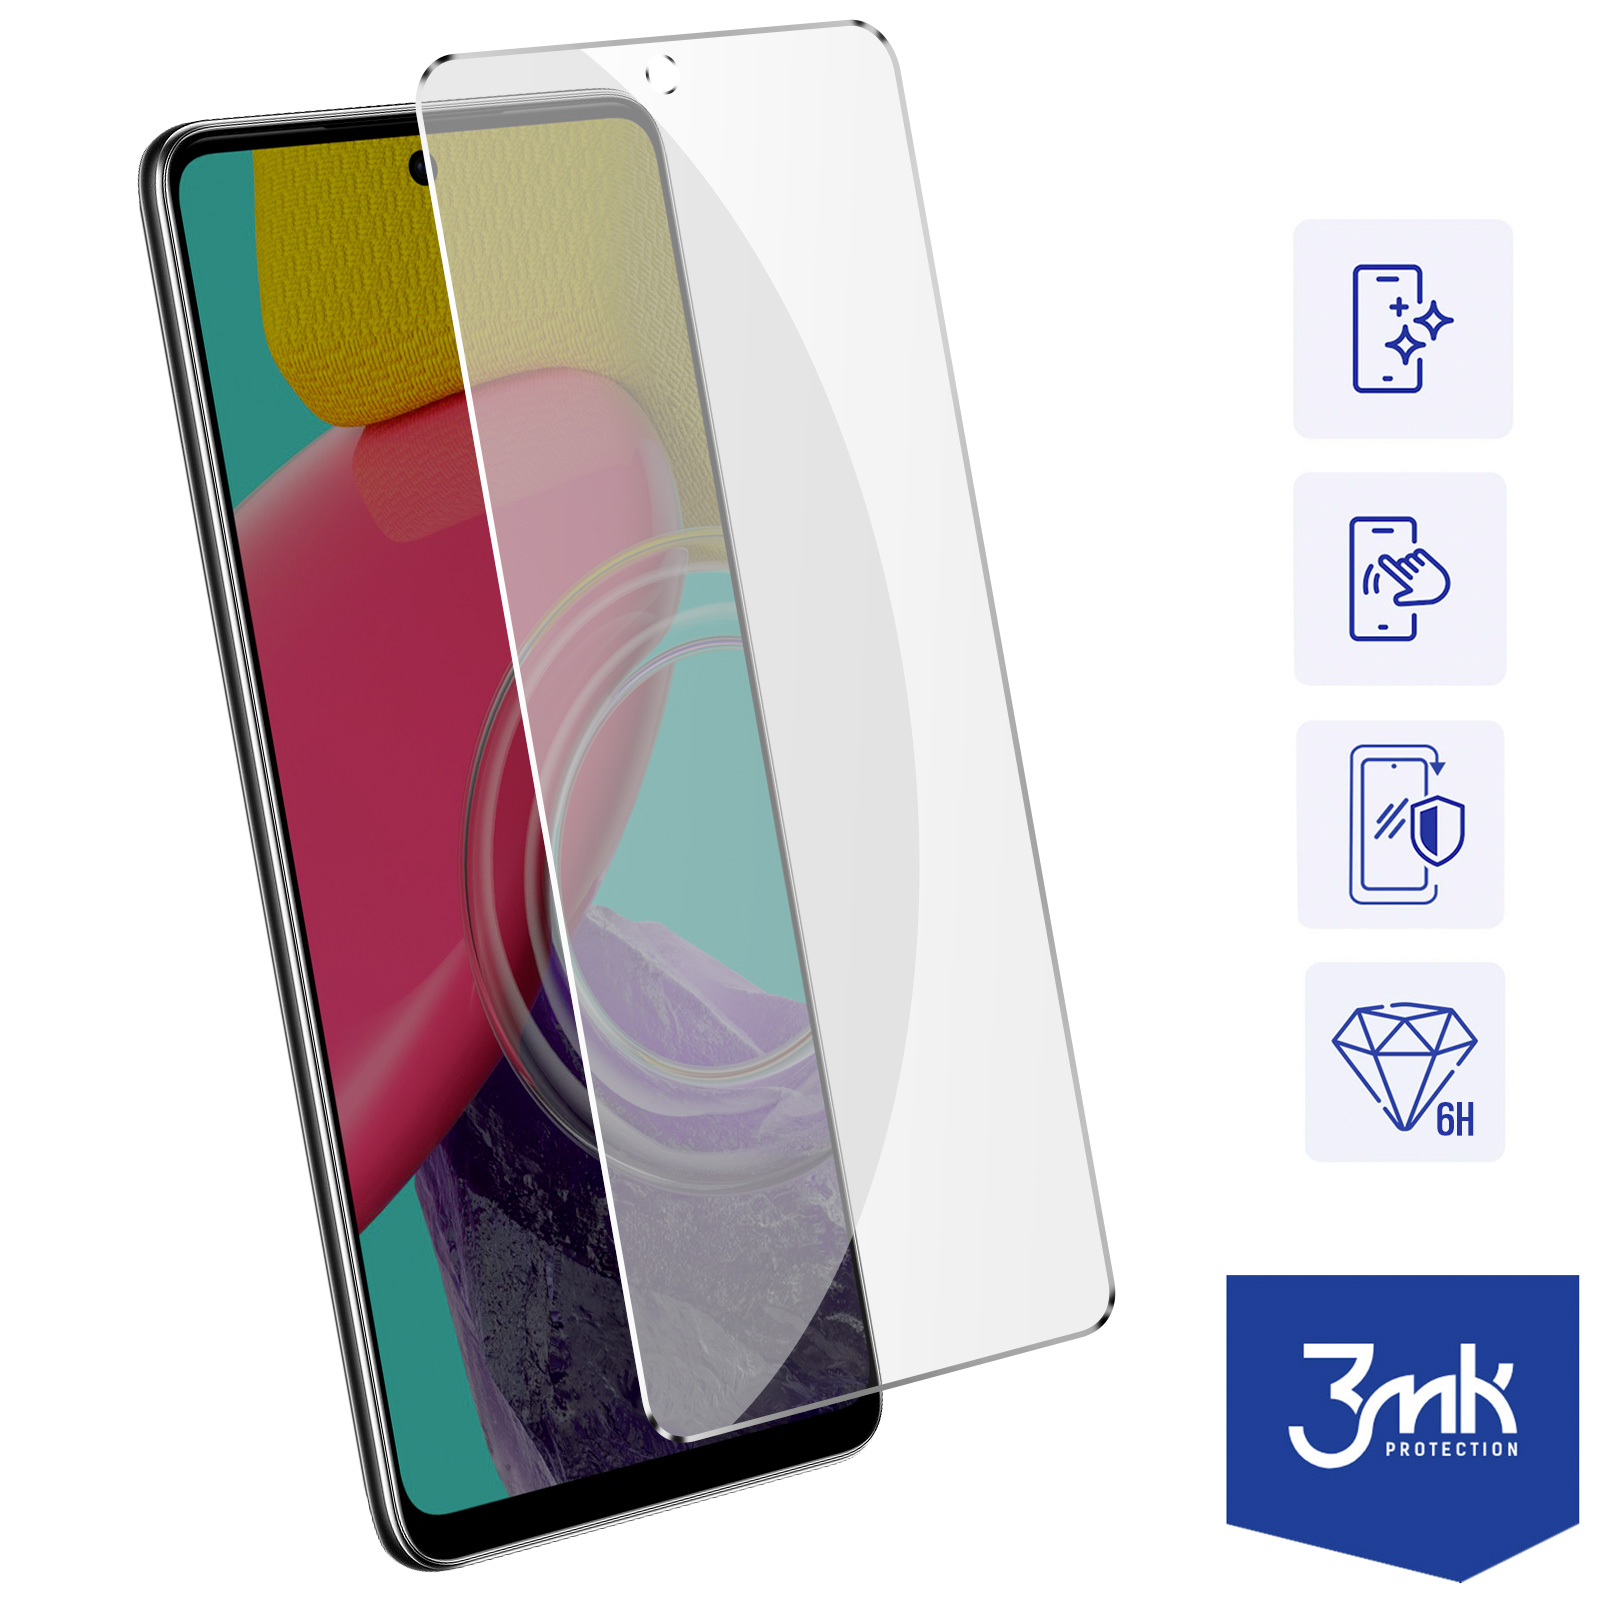 Samsung Galaxy M53 5G - tempered glass, glass screen protector 3MK